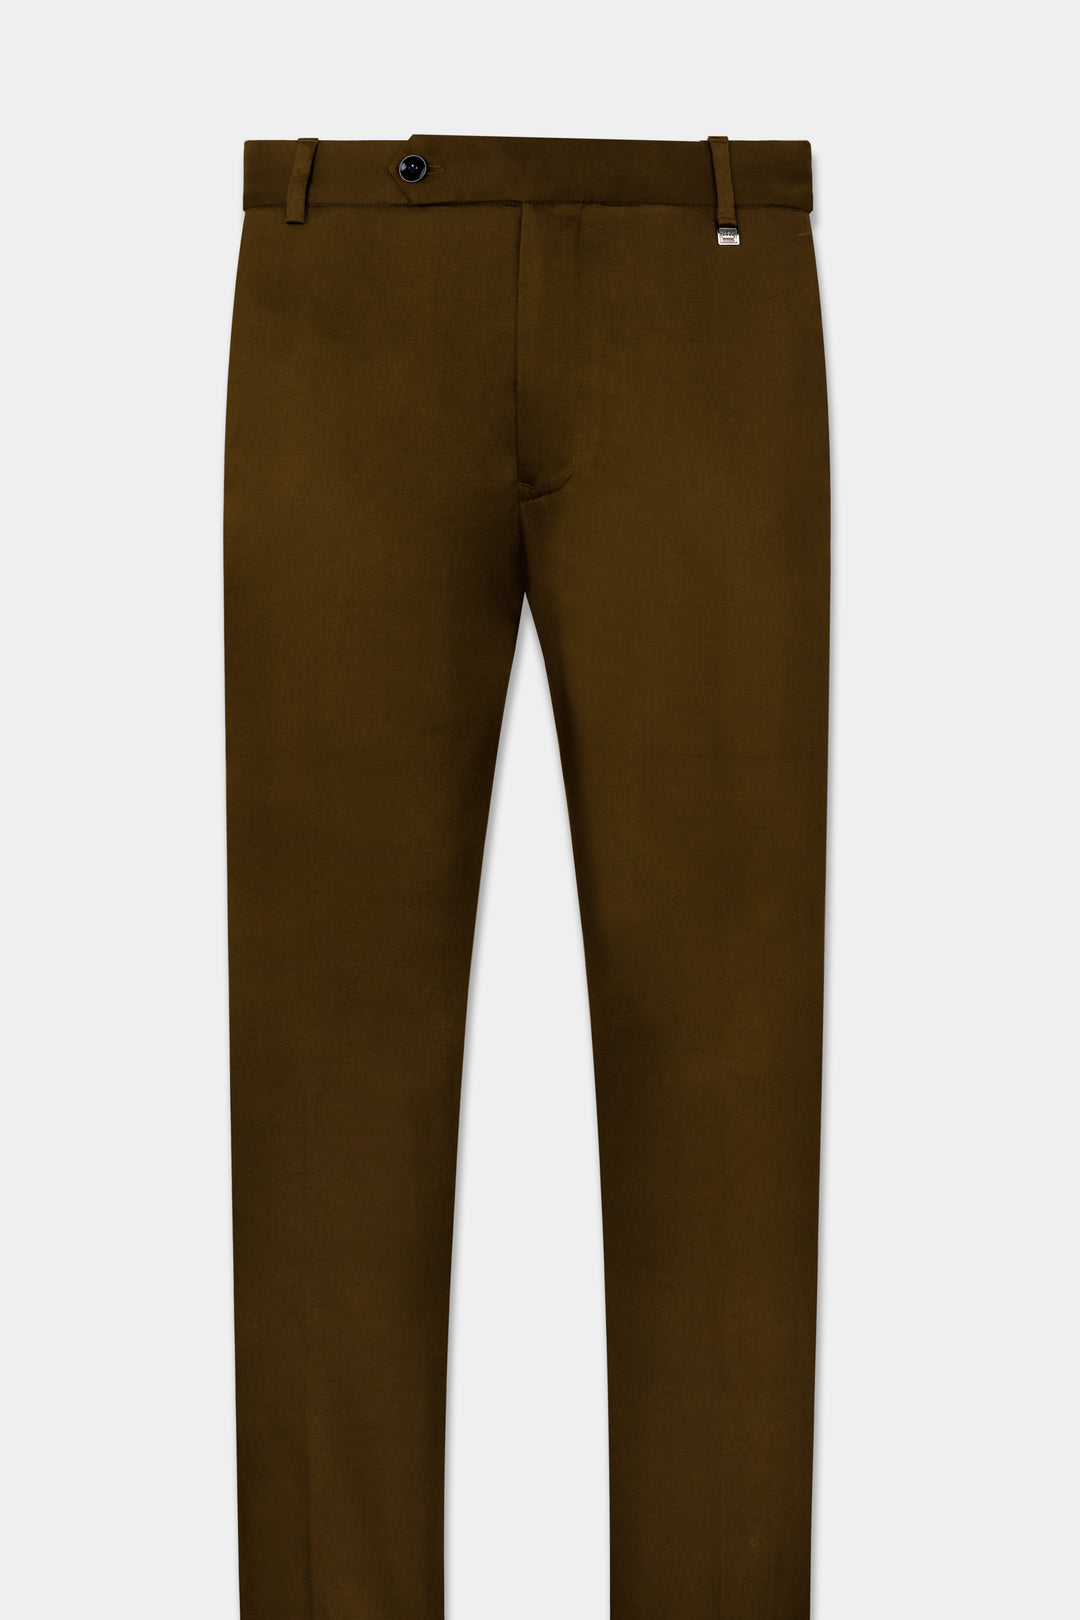 Buy OnlineSpykar Men Brown Cotton Slim Fit Ankle Length Plain Trousers